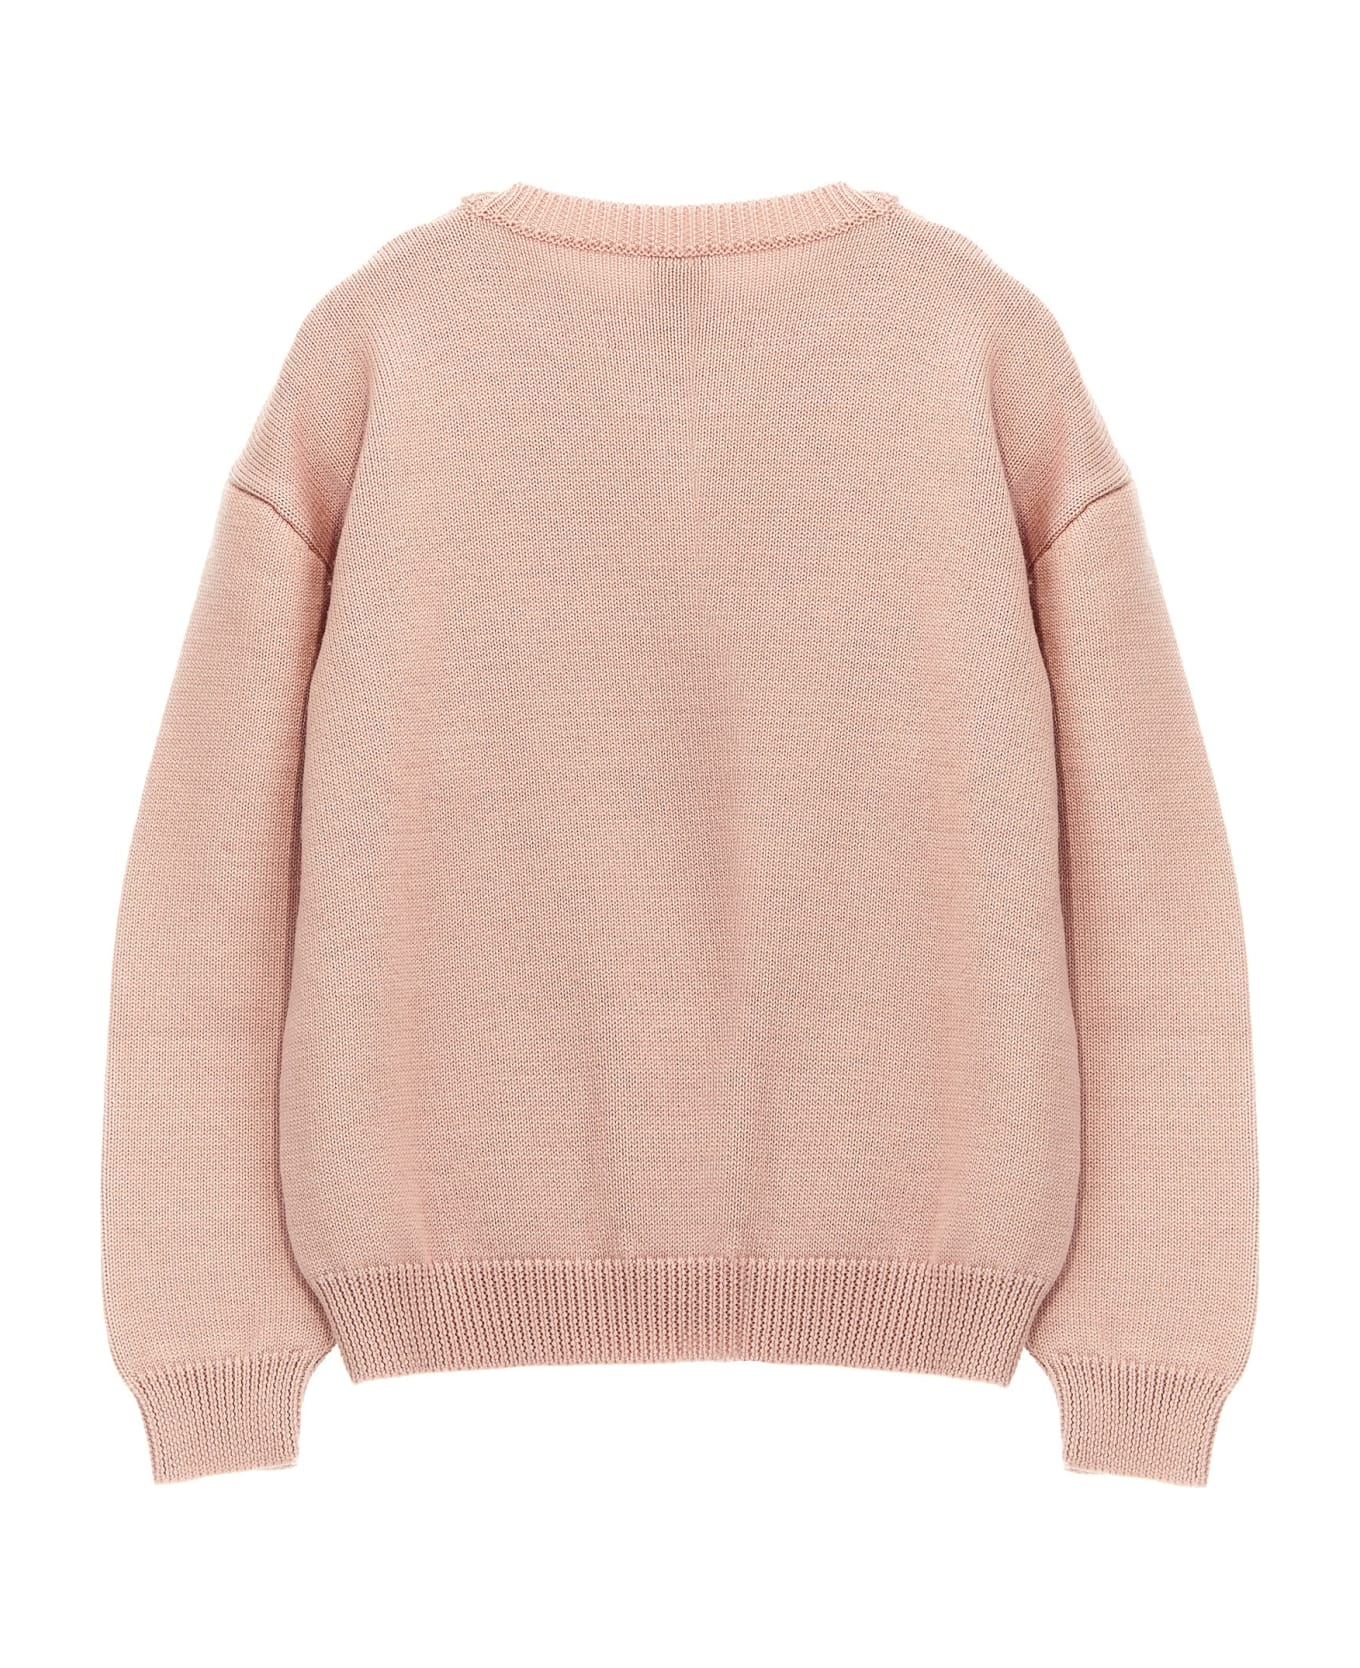 Fendi 'fendi Roma' Sweater - Pink ニットウェア＆スウェットシャツ